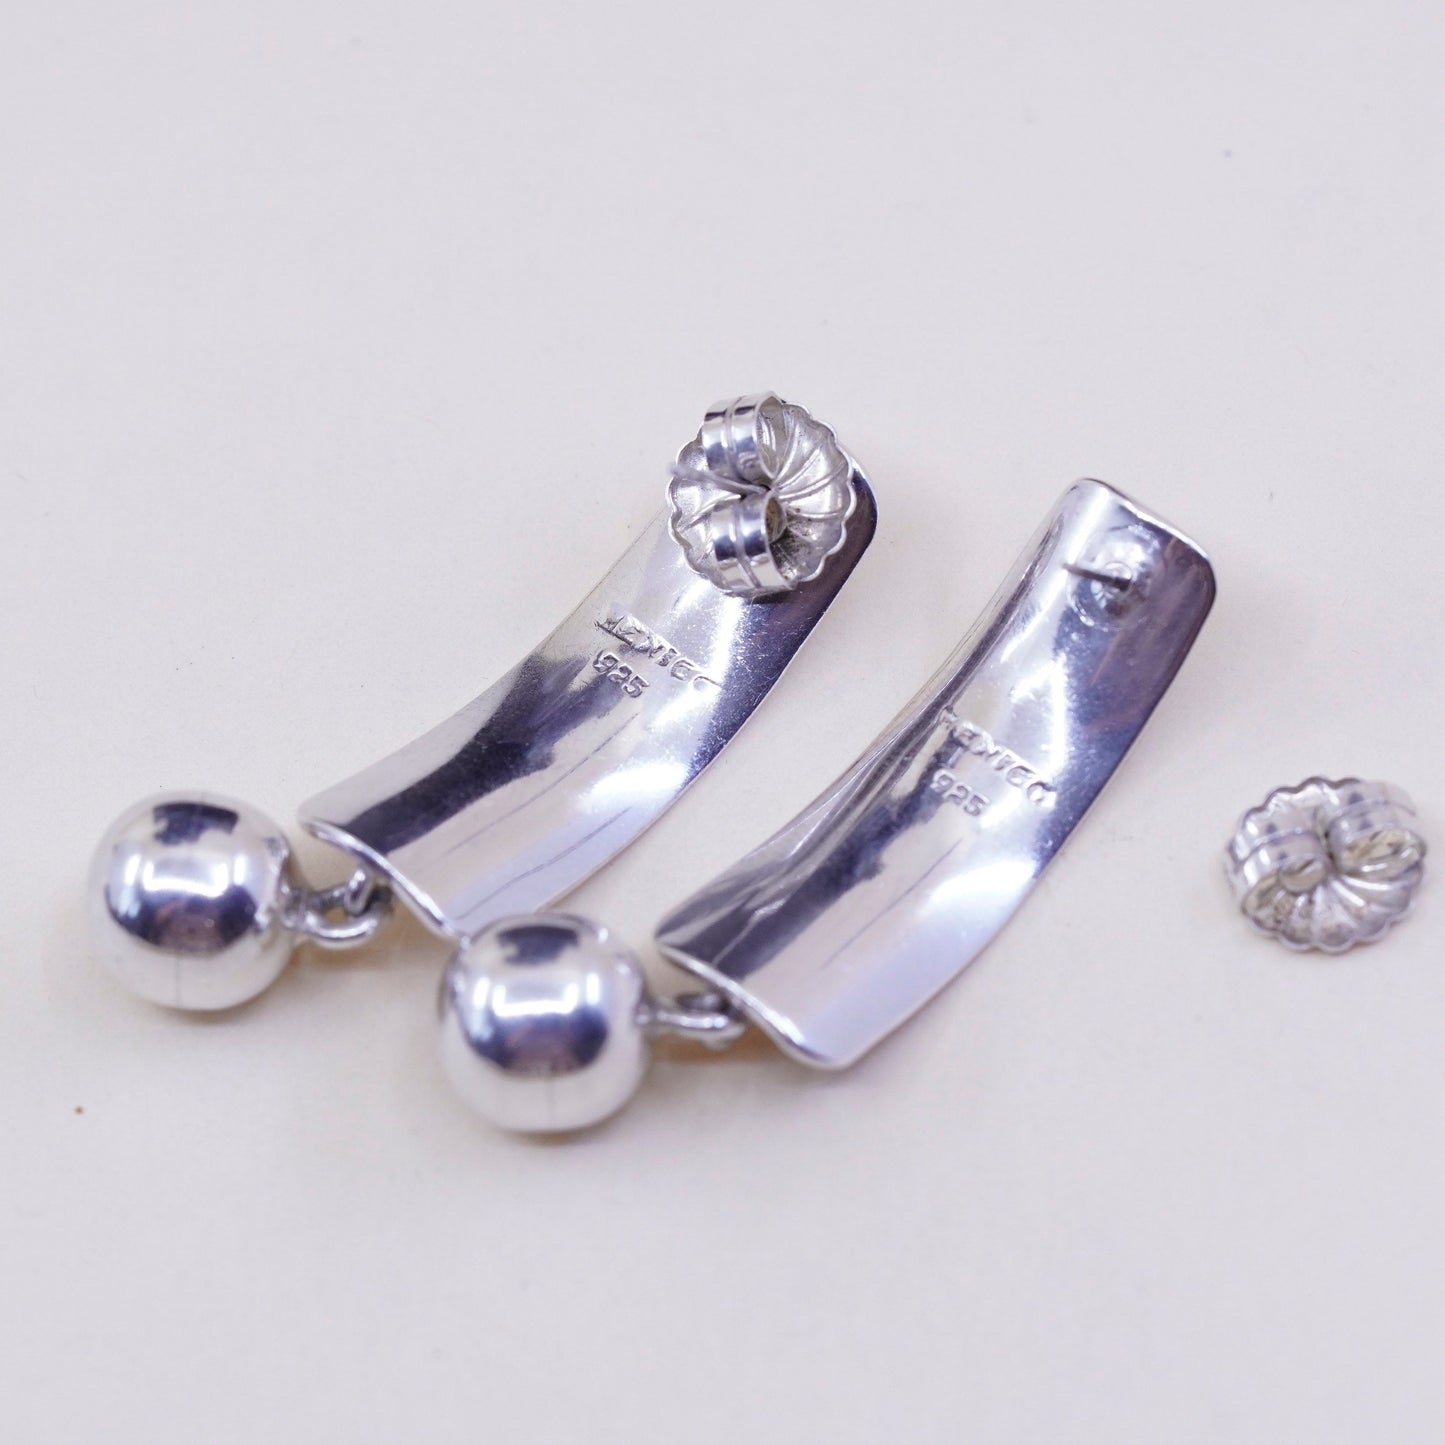 Vintage mexico sterling silver handmade earrings, 925 modern studs w/ beads